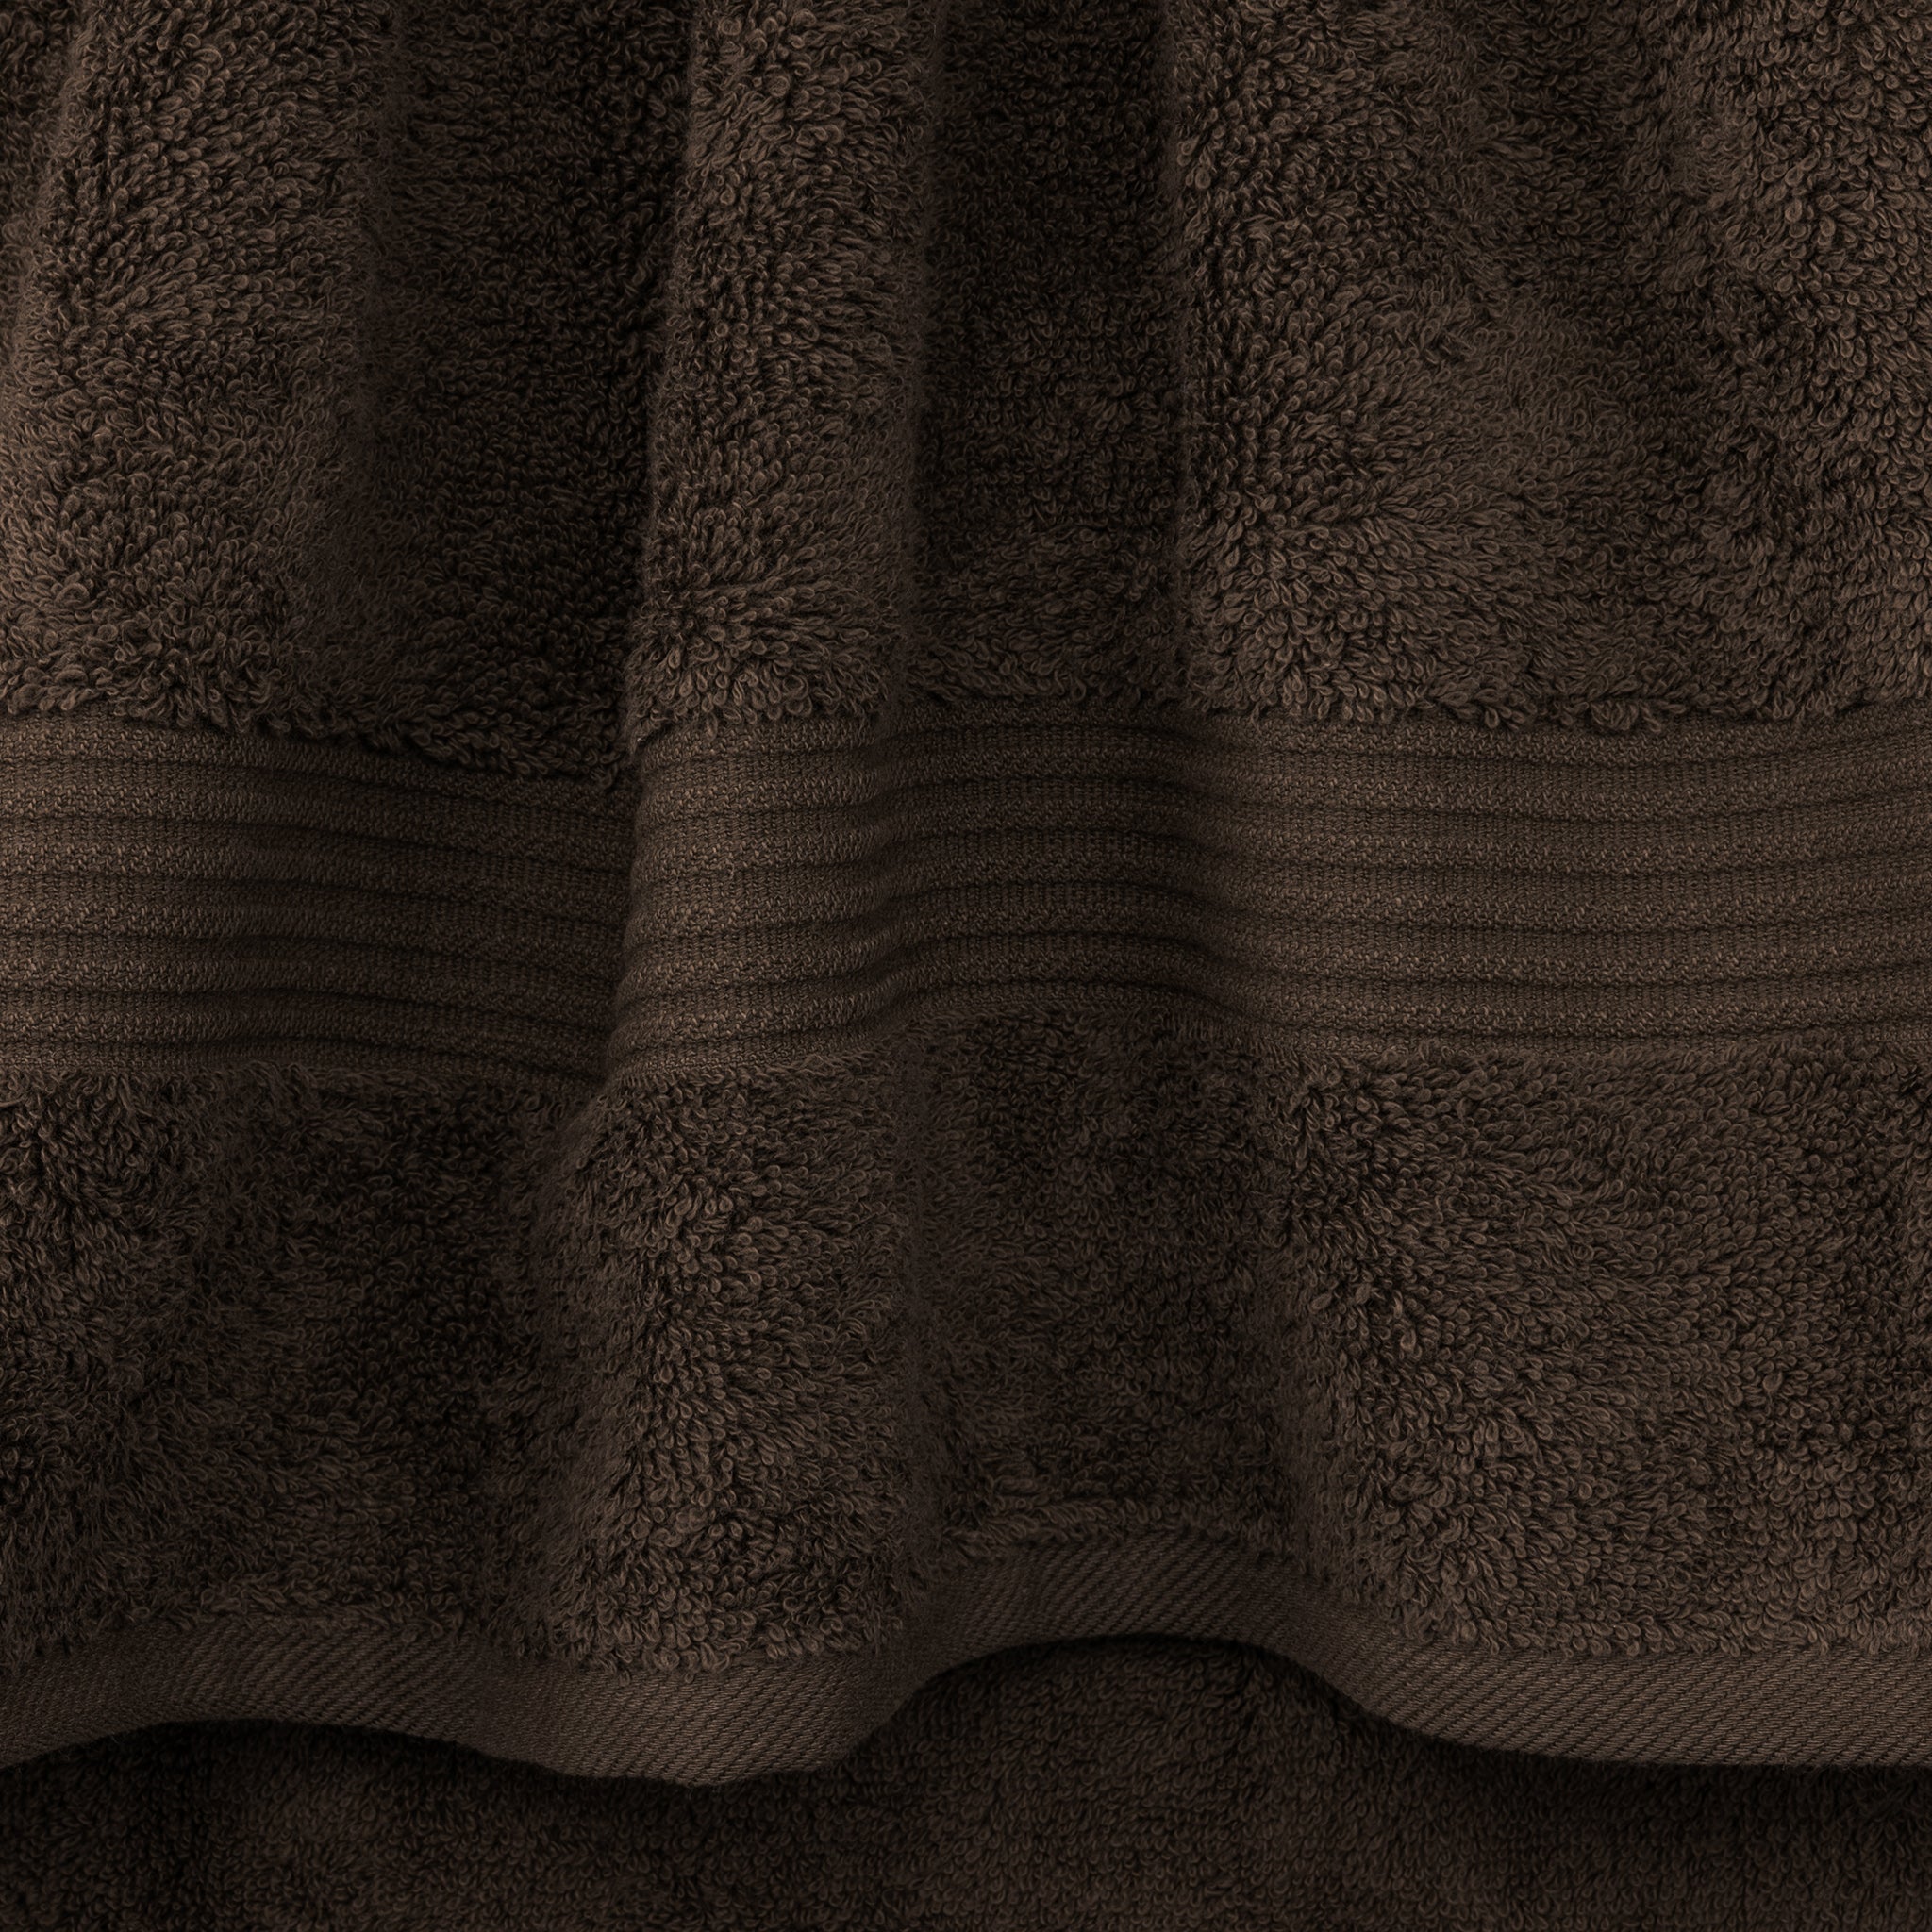 American Soft Linen Bekos 100% Cotton Turkish Towels, 4 Piece Hand Towel Set -brown-03